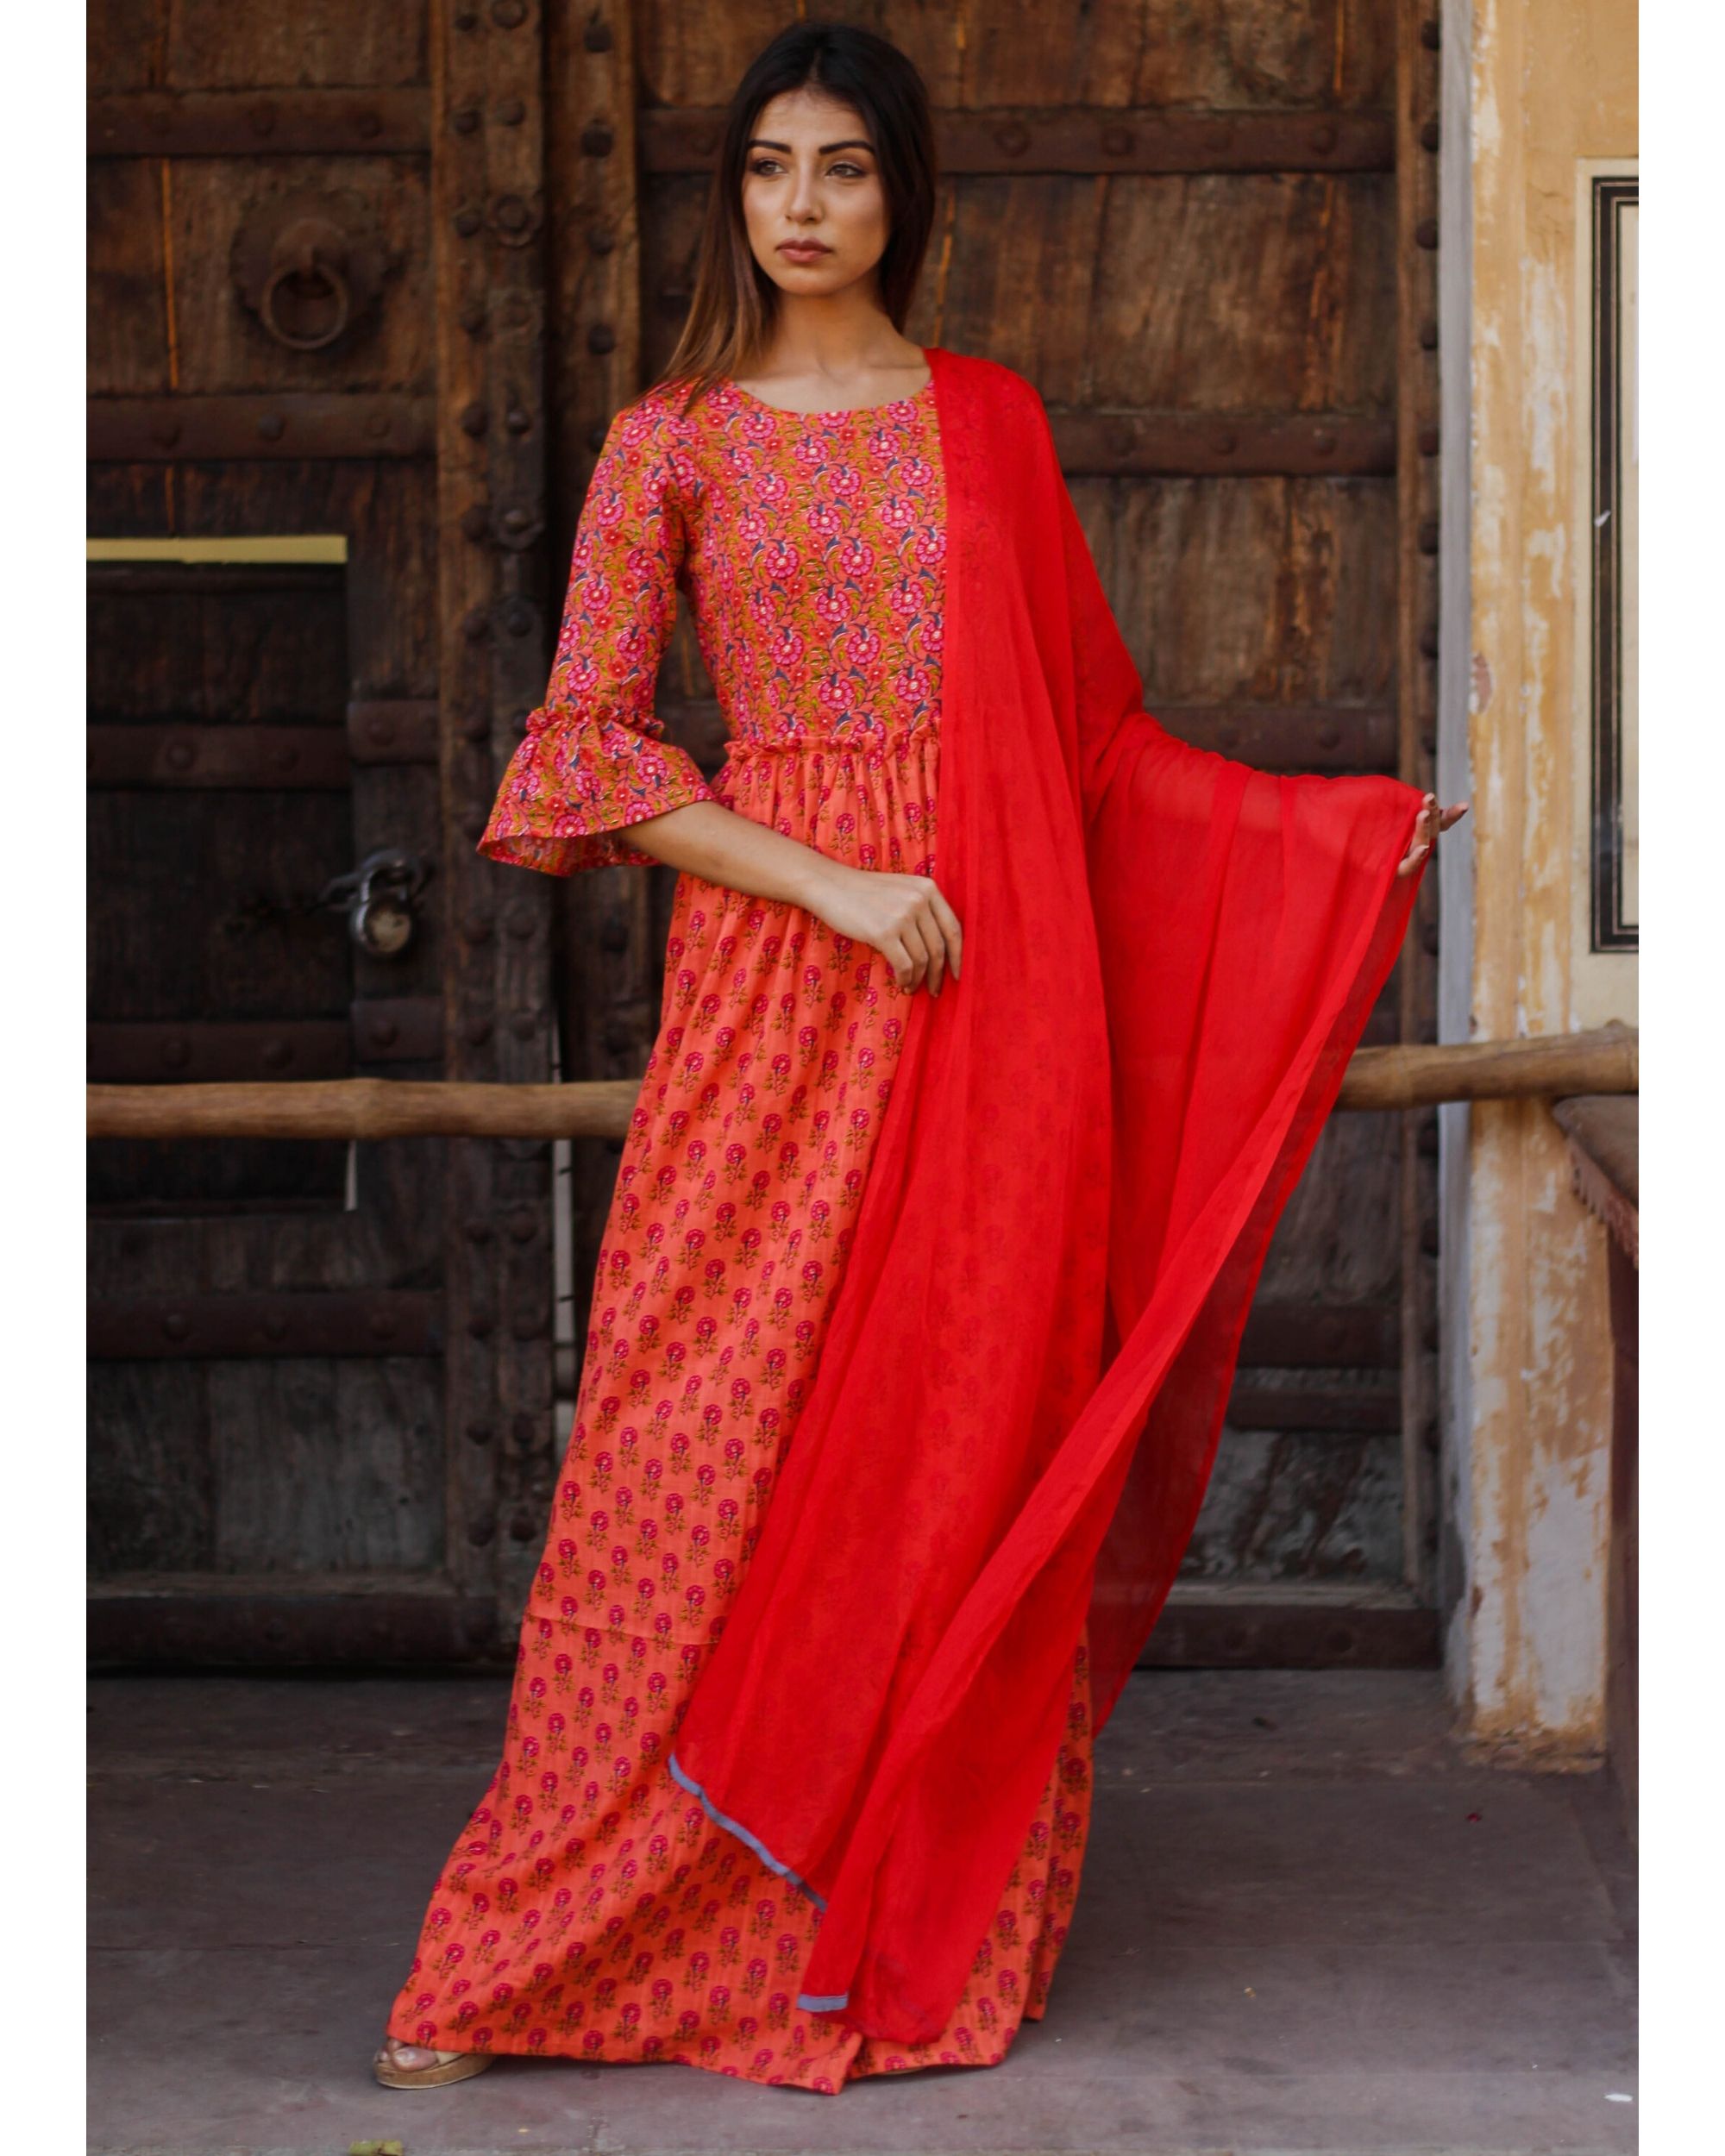 Orange floral printed ruffle dress by Amari Jaipur | The Secret Label